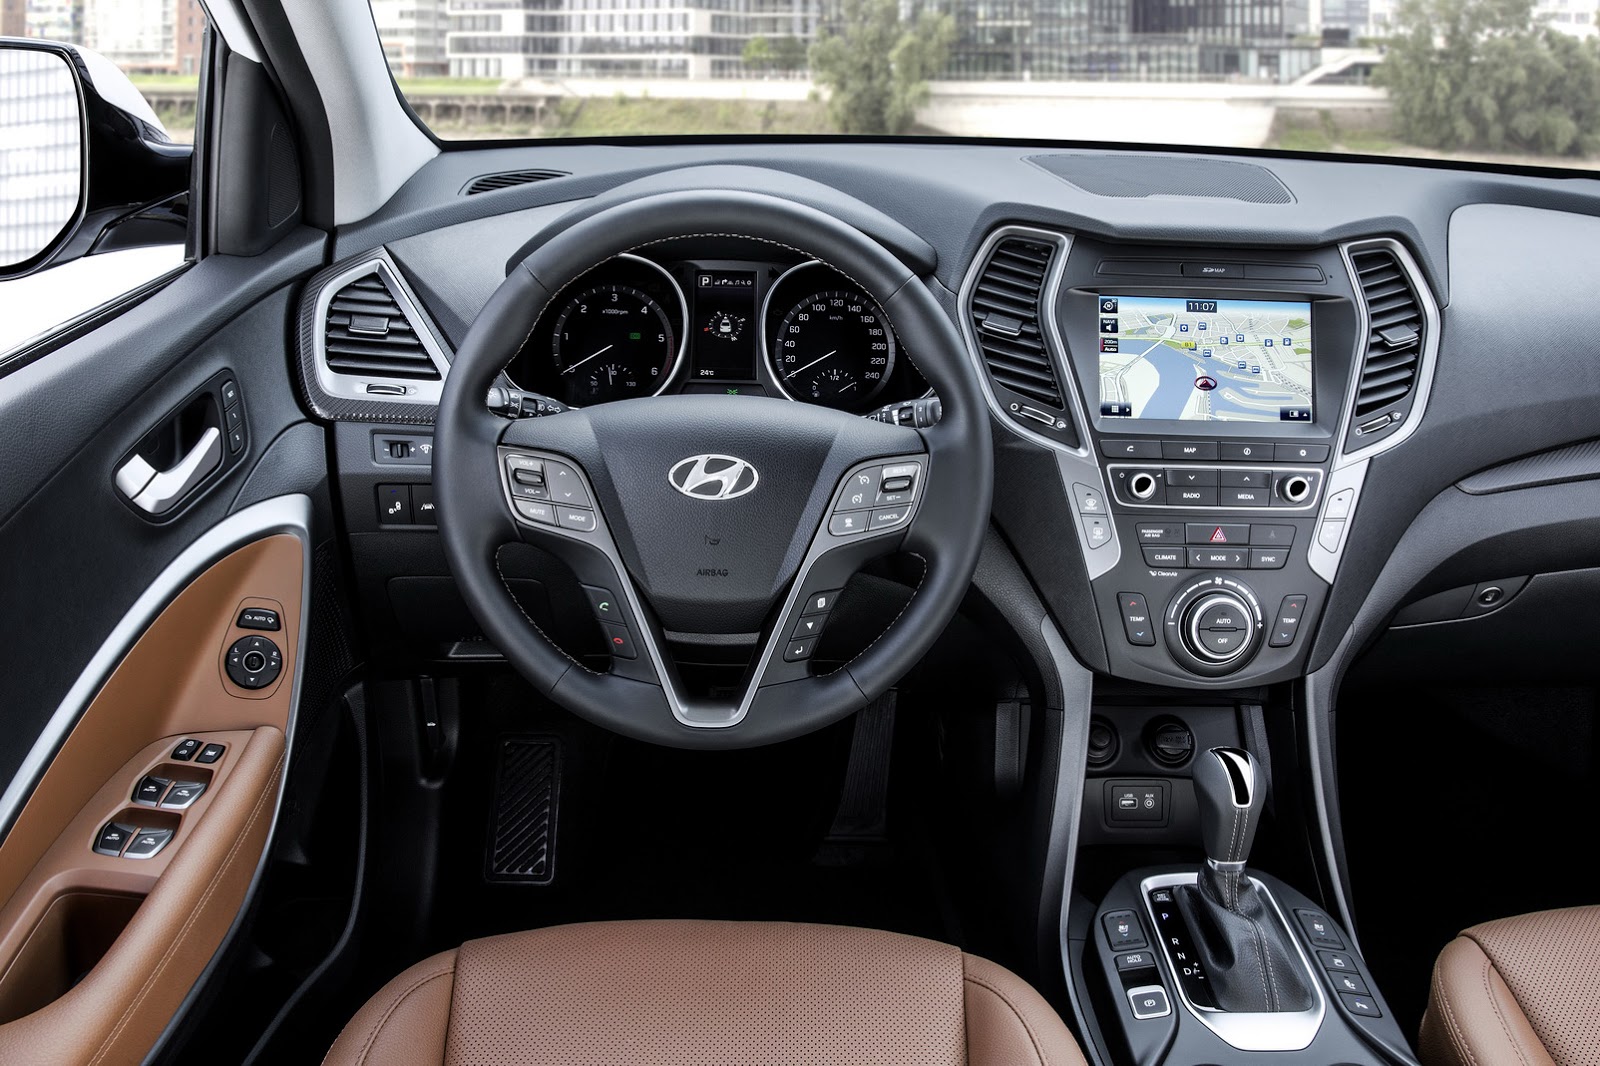 Facelifted 2017 Hyundai Santa Fe Unveiled, Debuts In 